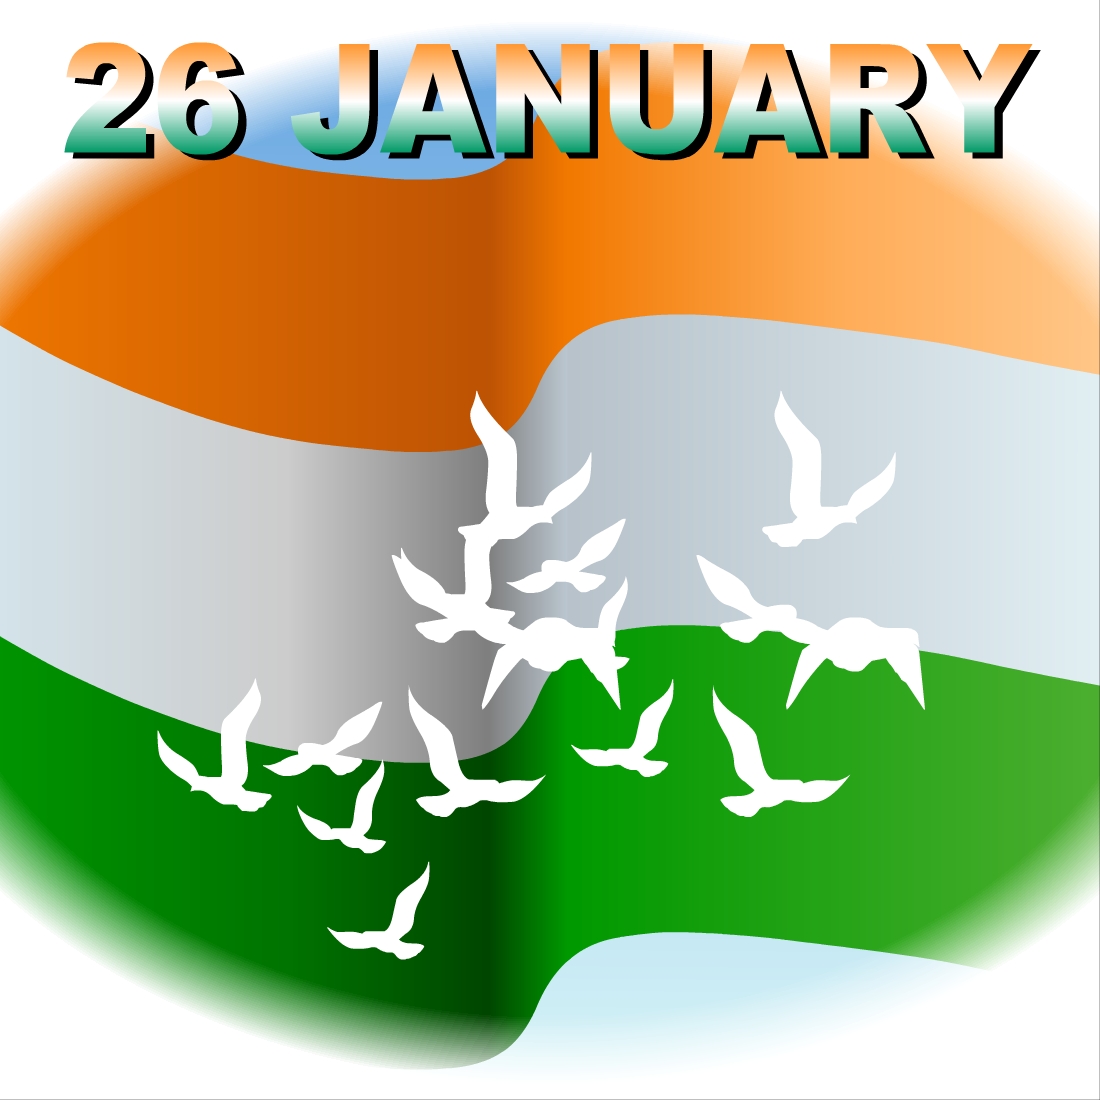 Wonderful image of the Indian flag